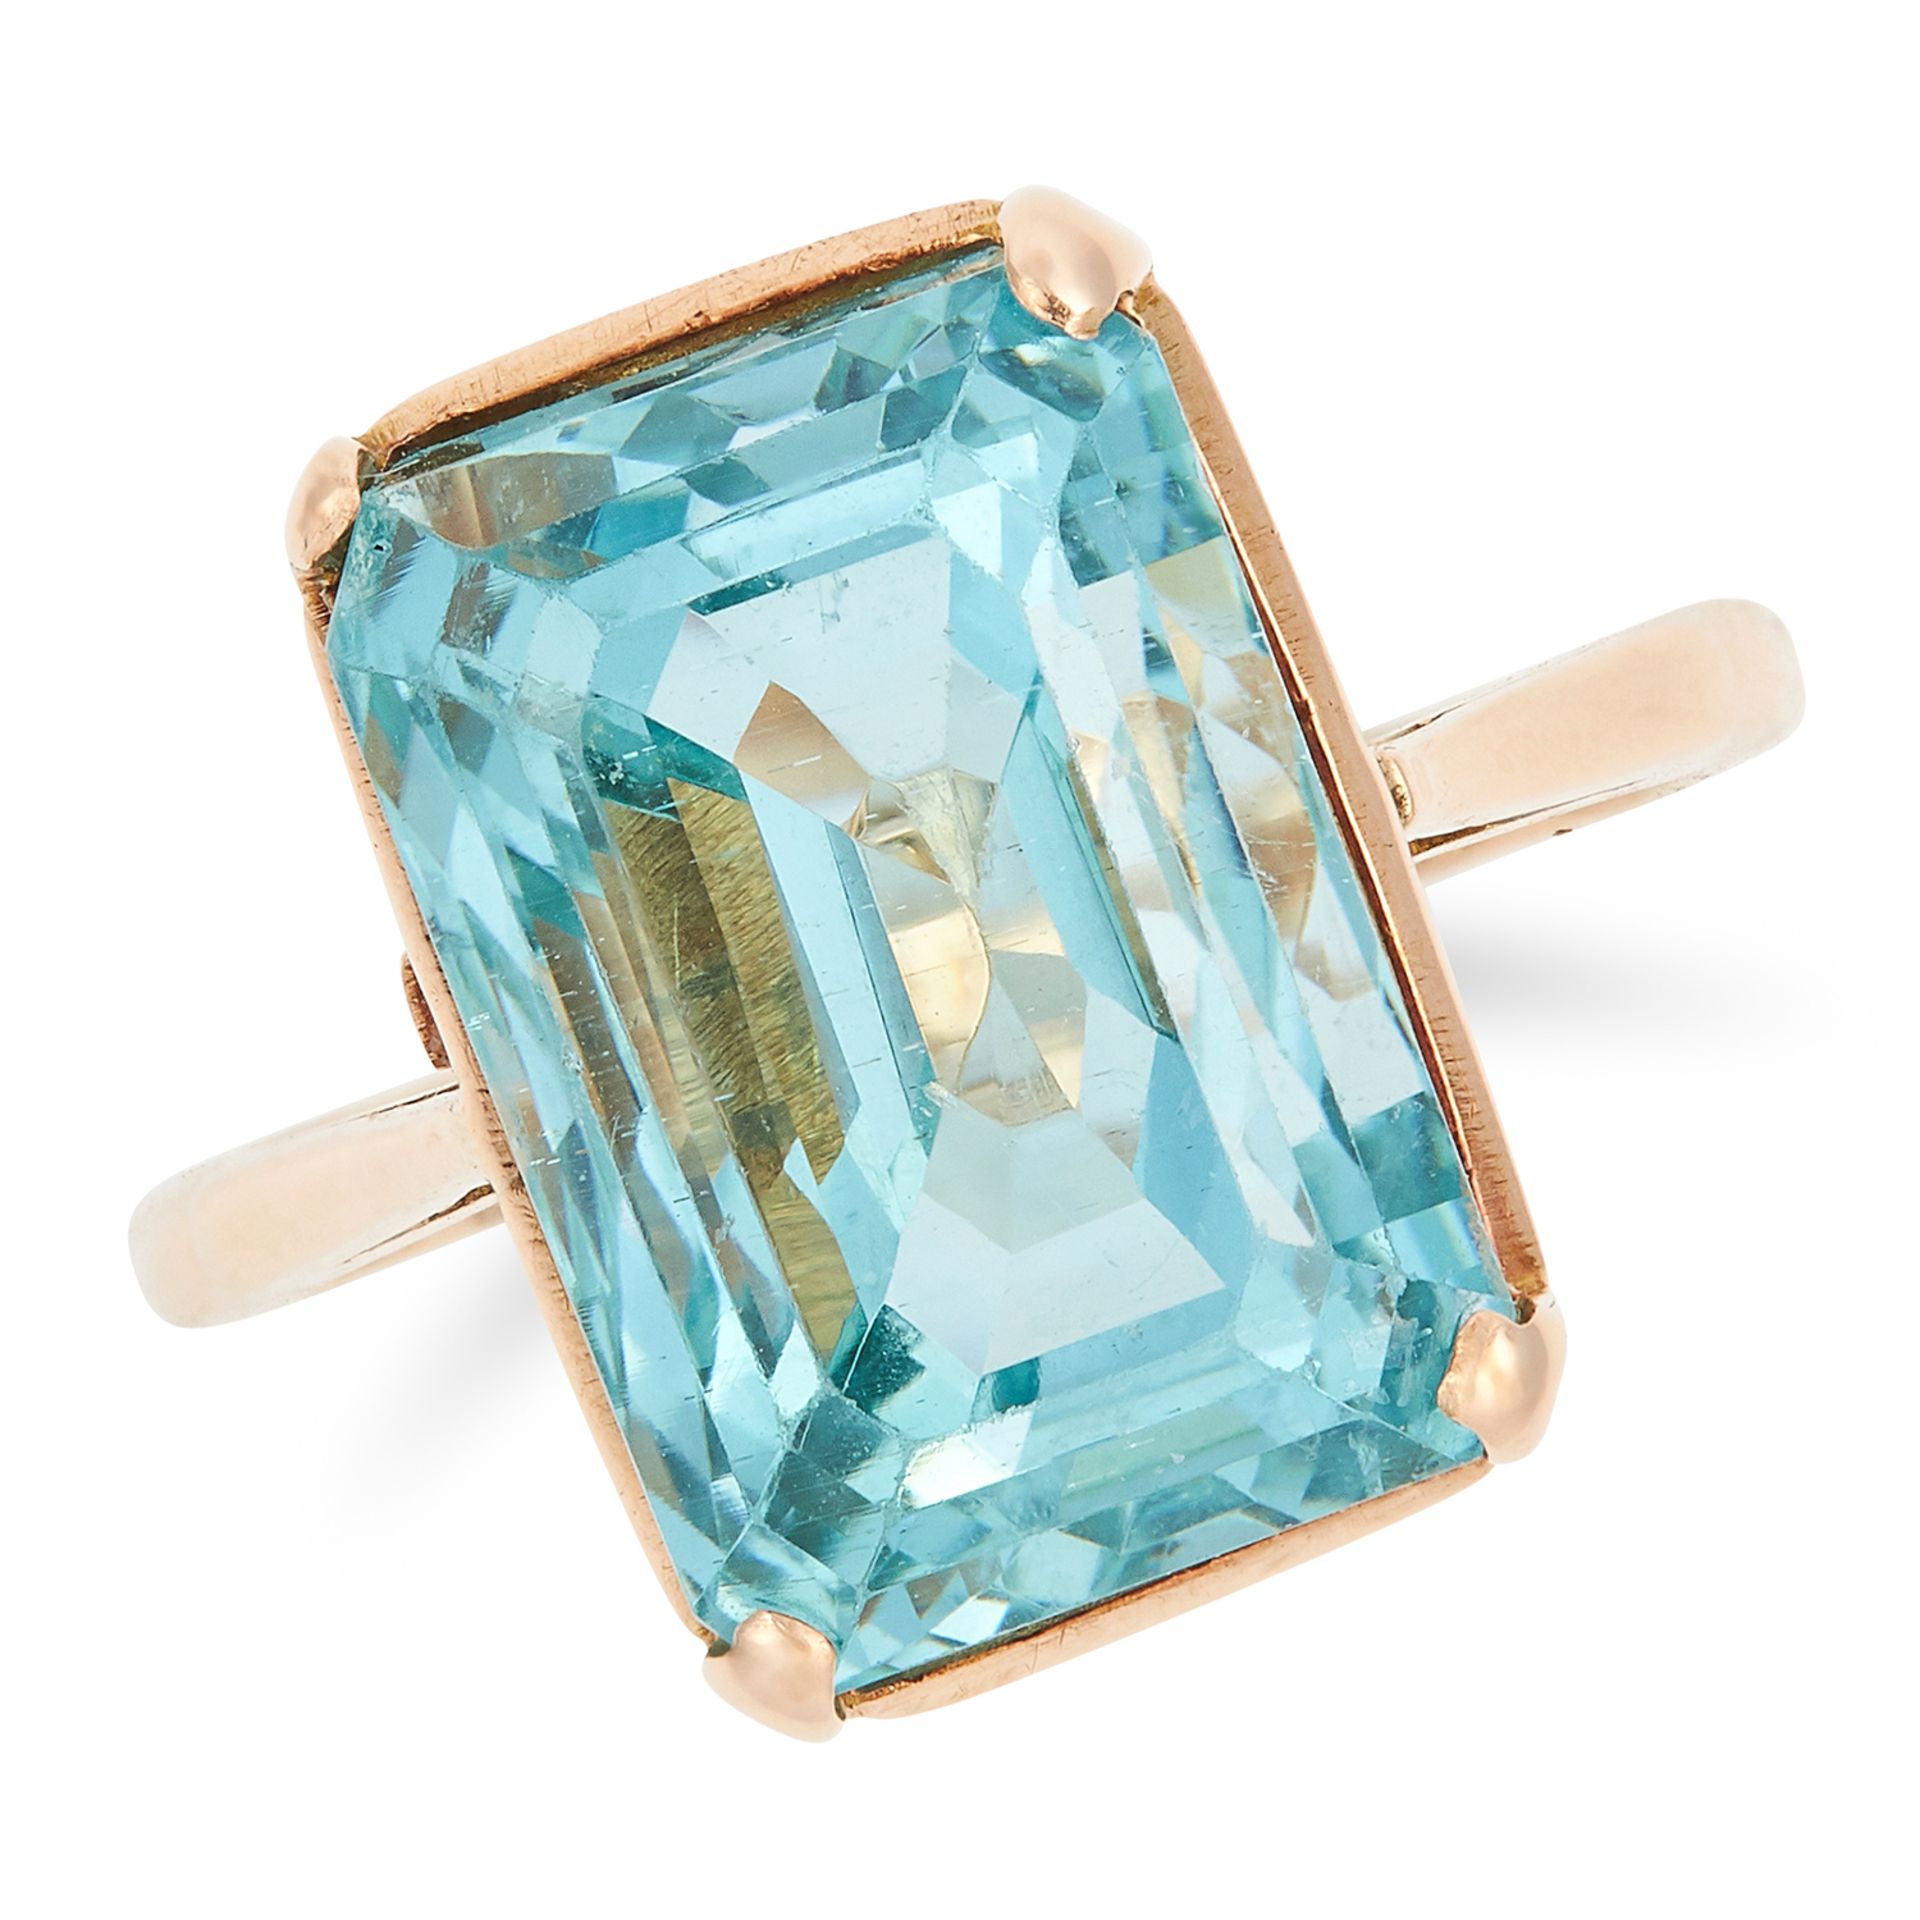 AQUAMARINE RING set with an emerald cut aquamarine of 12.53 carats, size N / 7, 7.2g.